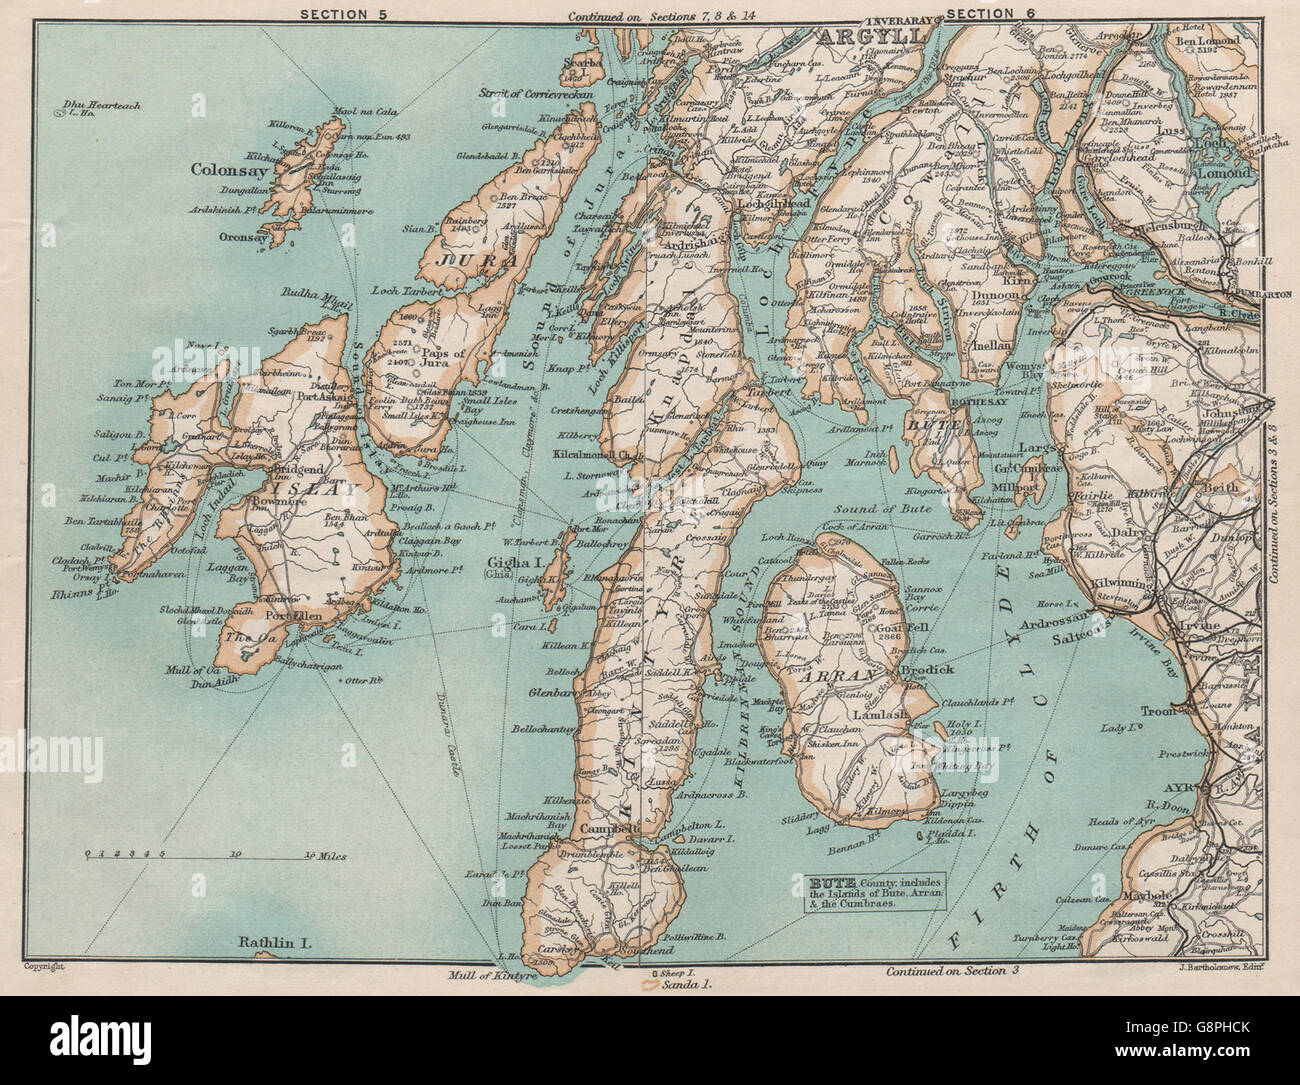 ARGYLL & BUTE. Islay Jura Colonsay Arran Mull of Kintyre. Schottland, 1905-Karte Stockfoto